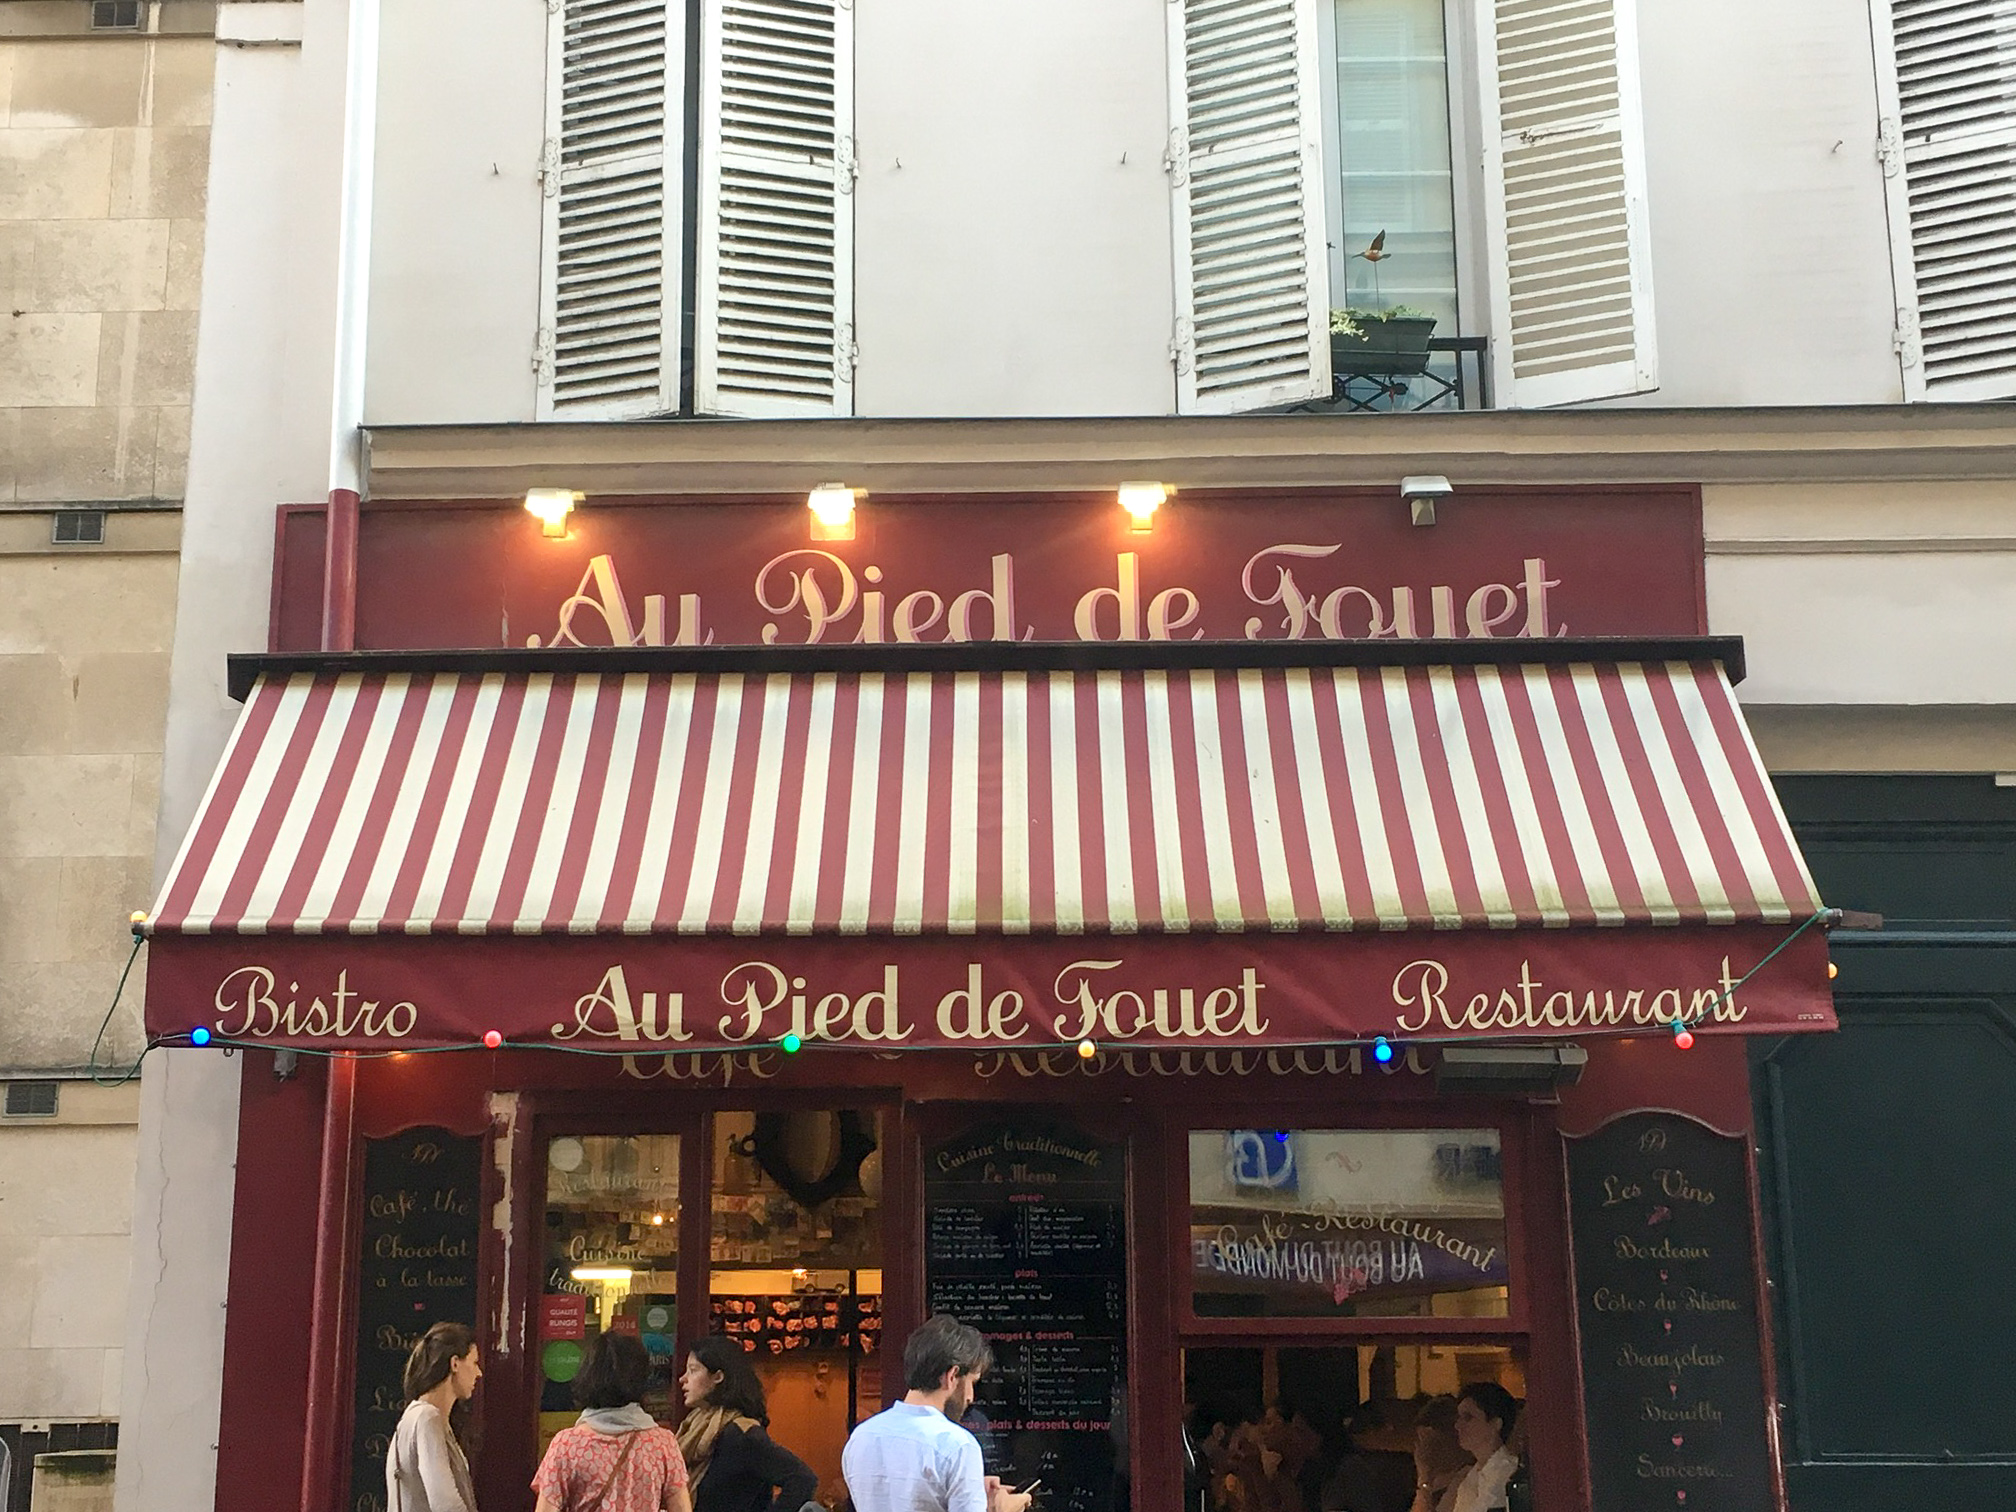 Au Pied de Fouet Paris travel, restaurant, and food guide